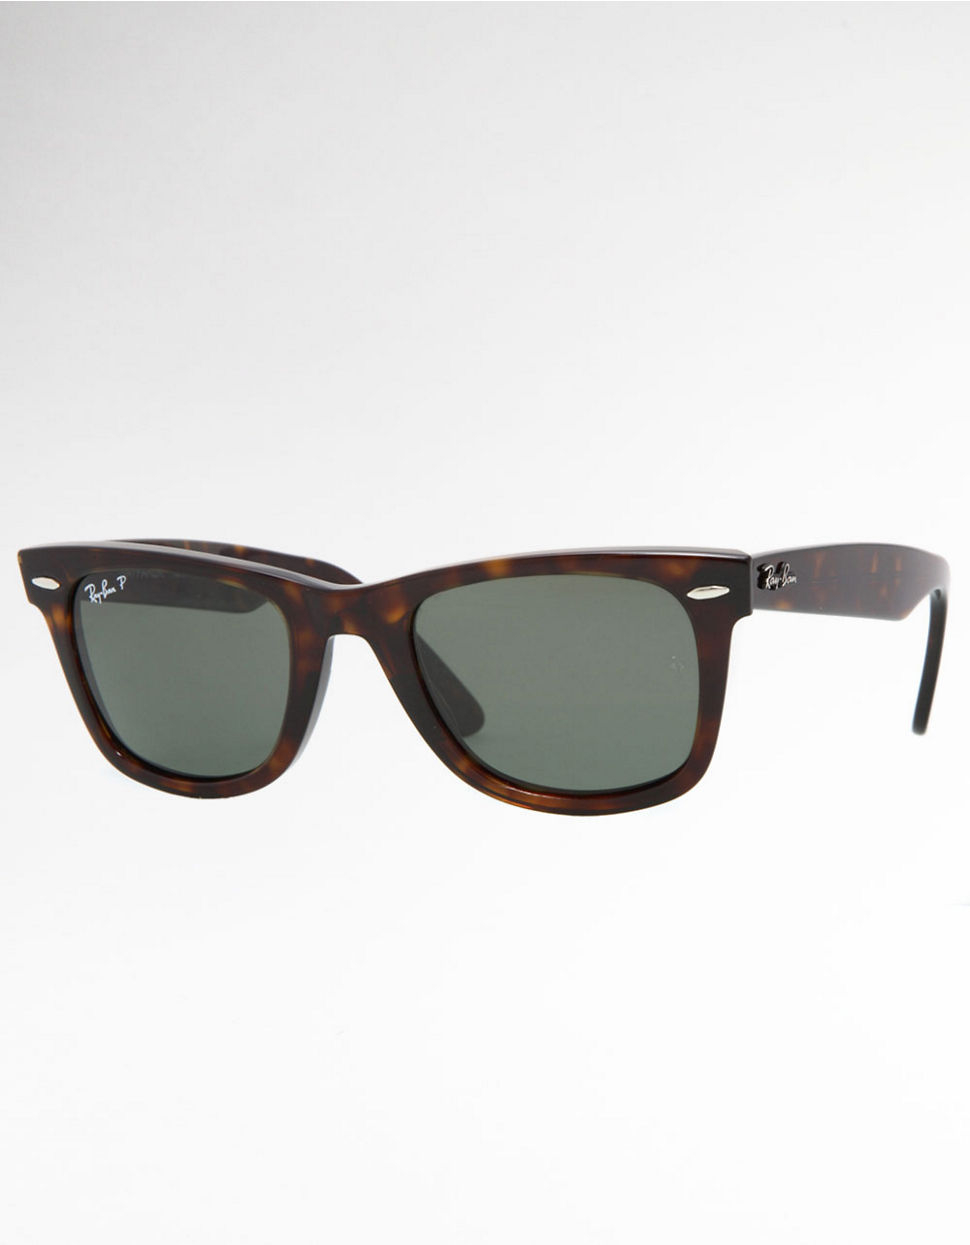 Ray Ban Wayfarer Tortoise Sunglasses In Brown For Men Lyst 